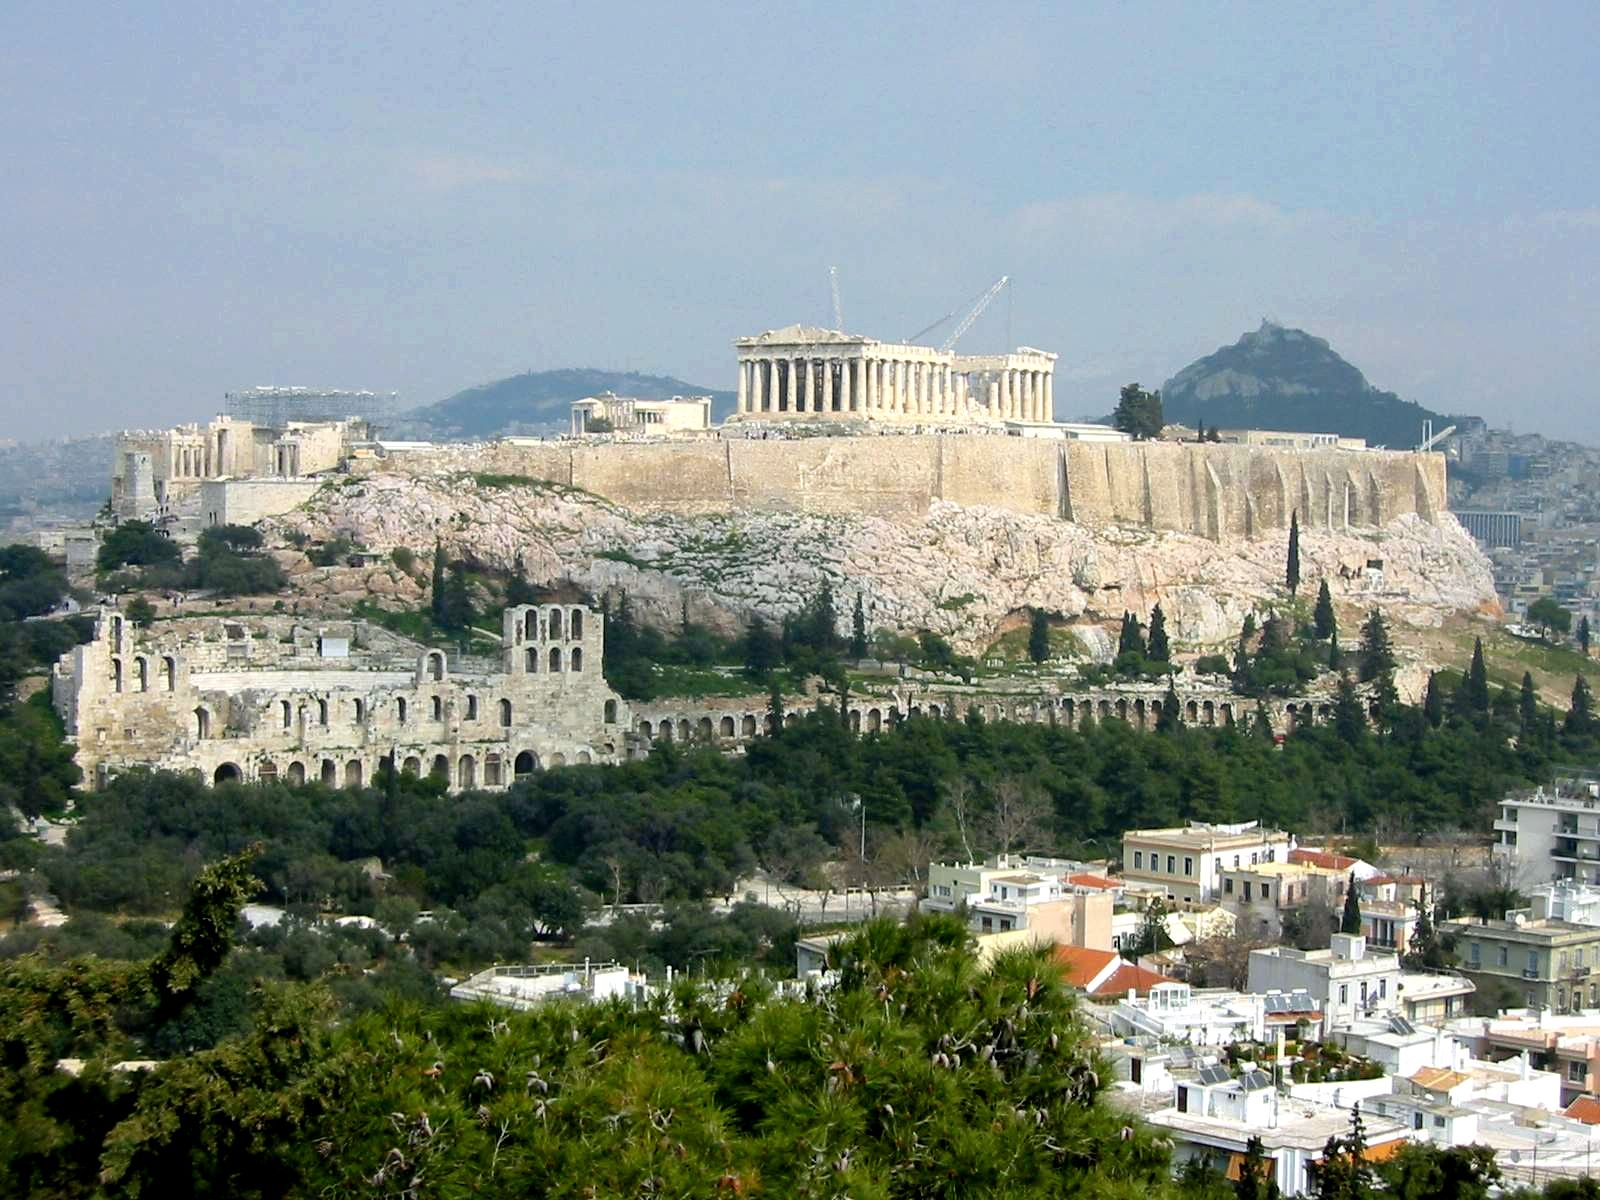 http://www.net4info.de/cpg/albums/userpics/Athens_Acropolis.jpg